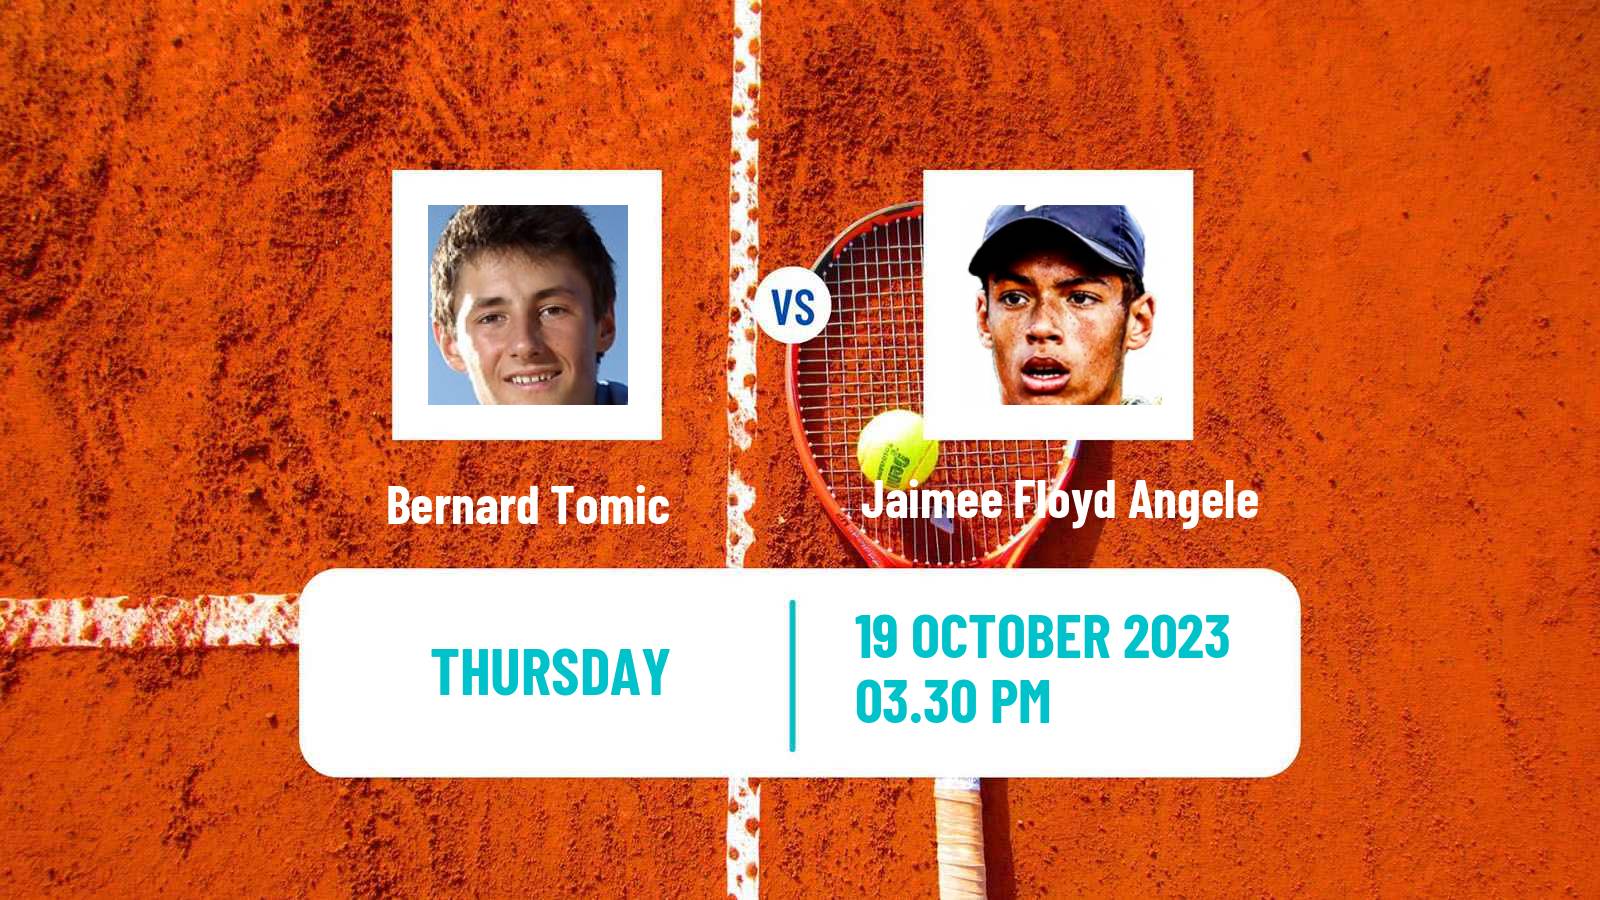 Tennis ITF M15 Las Vegas Nv Men Bernard Tomic - Jaimee Floyd Angele